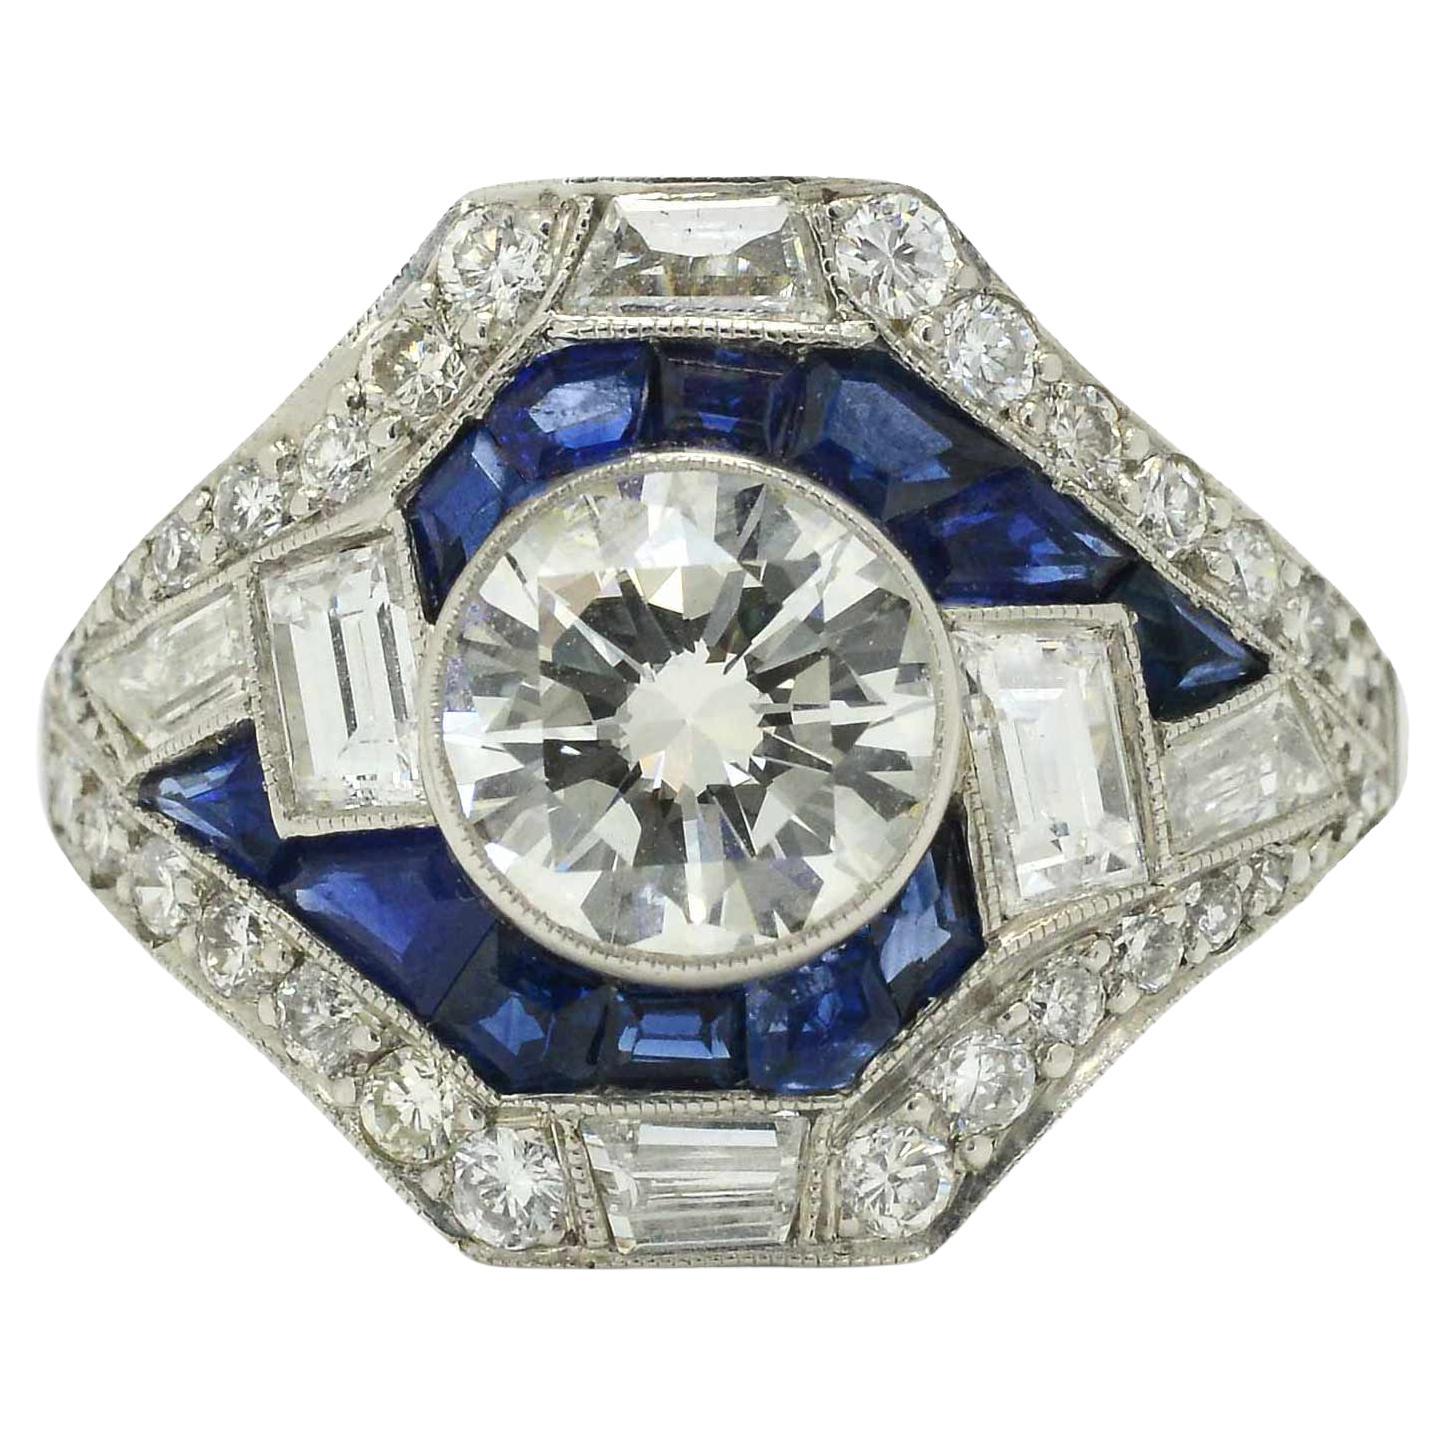 New Asymmetric Art Deco Style Diamond Sapphire Engagement Ring Cocktail Design